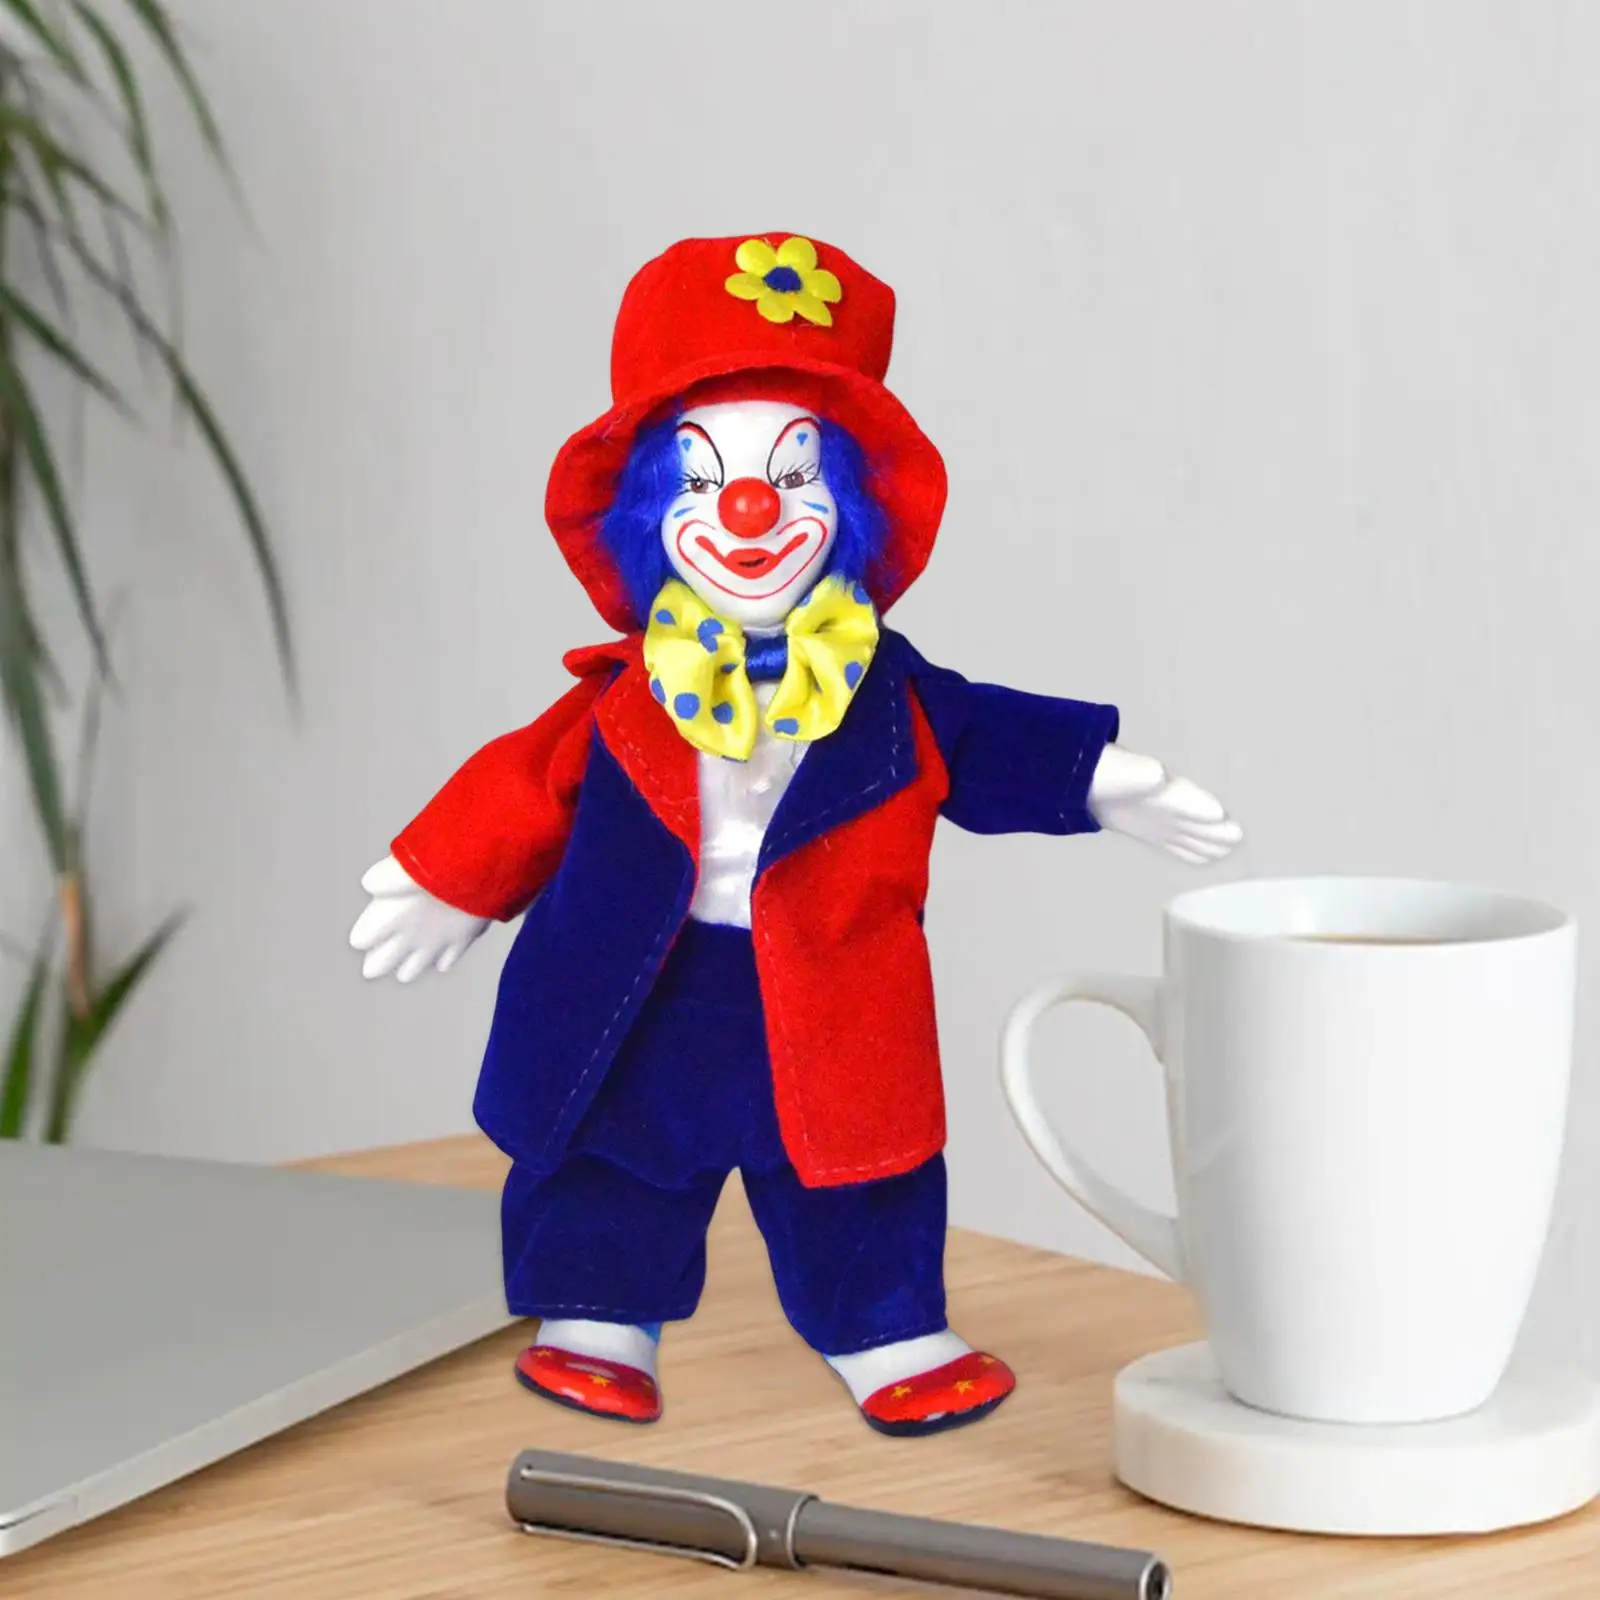 18cm Clown Doll, Dolls Model Toy Clown Model Crafts Clown Stuffed Doll for Table Bedroom Room Decor Birthdays Gift